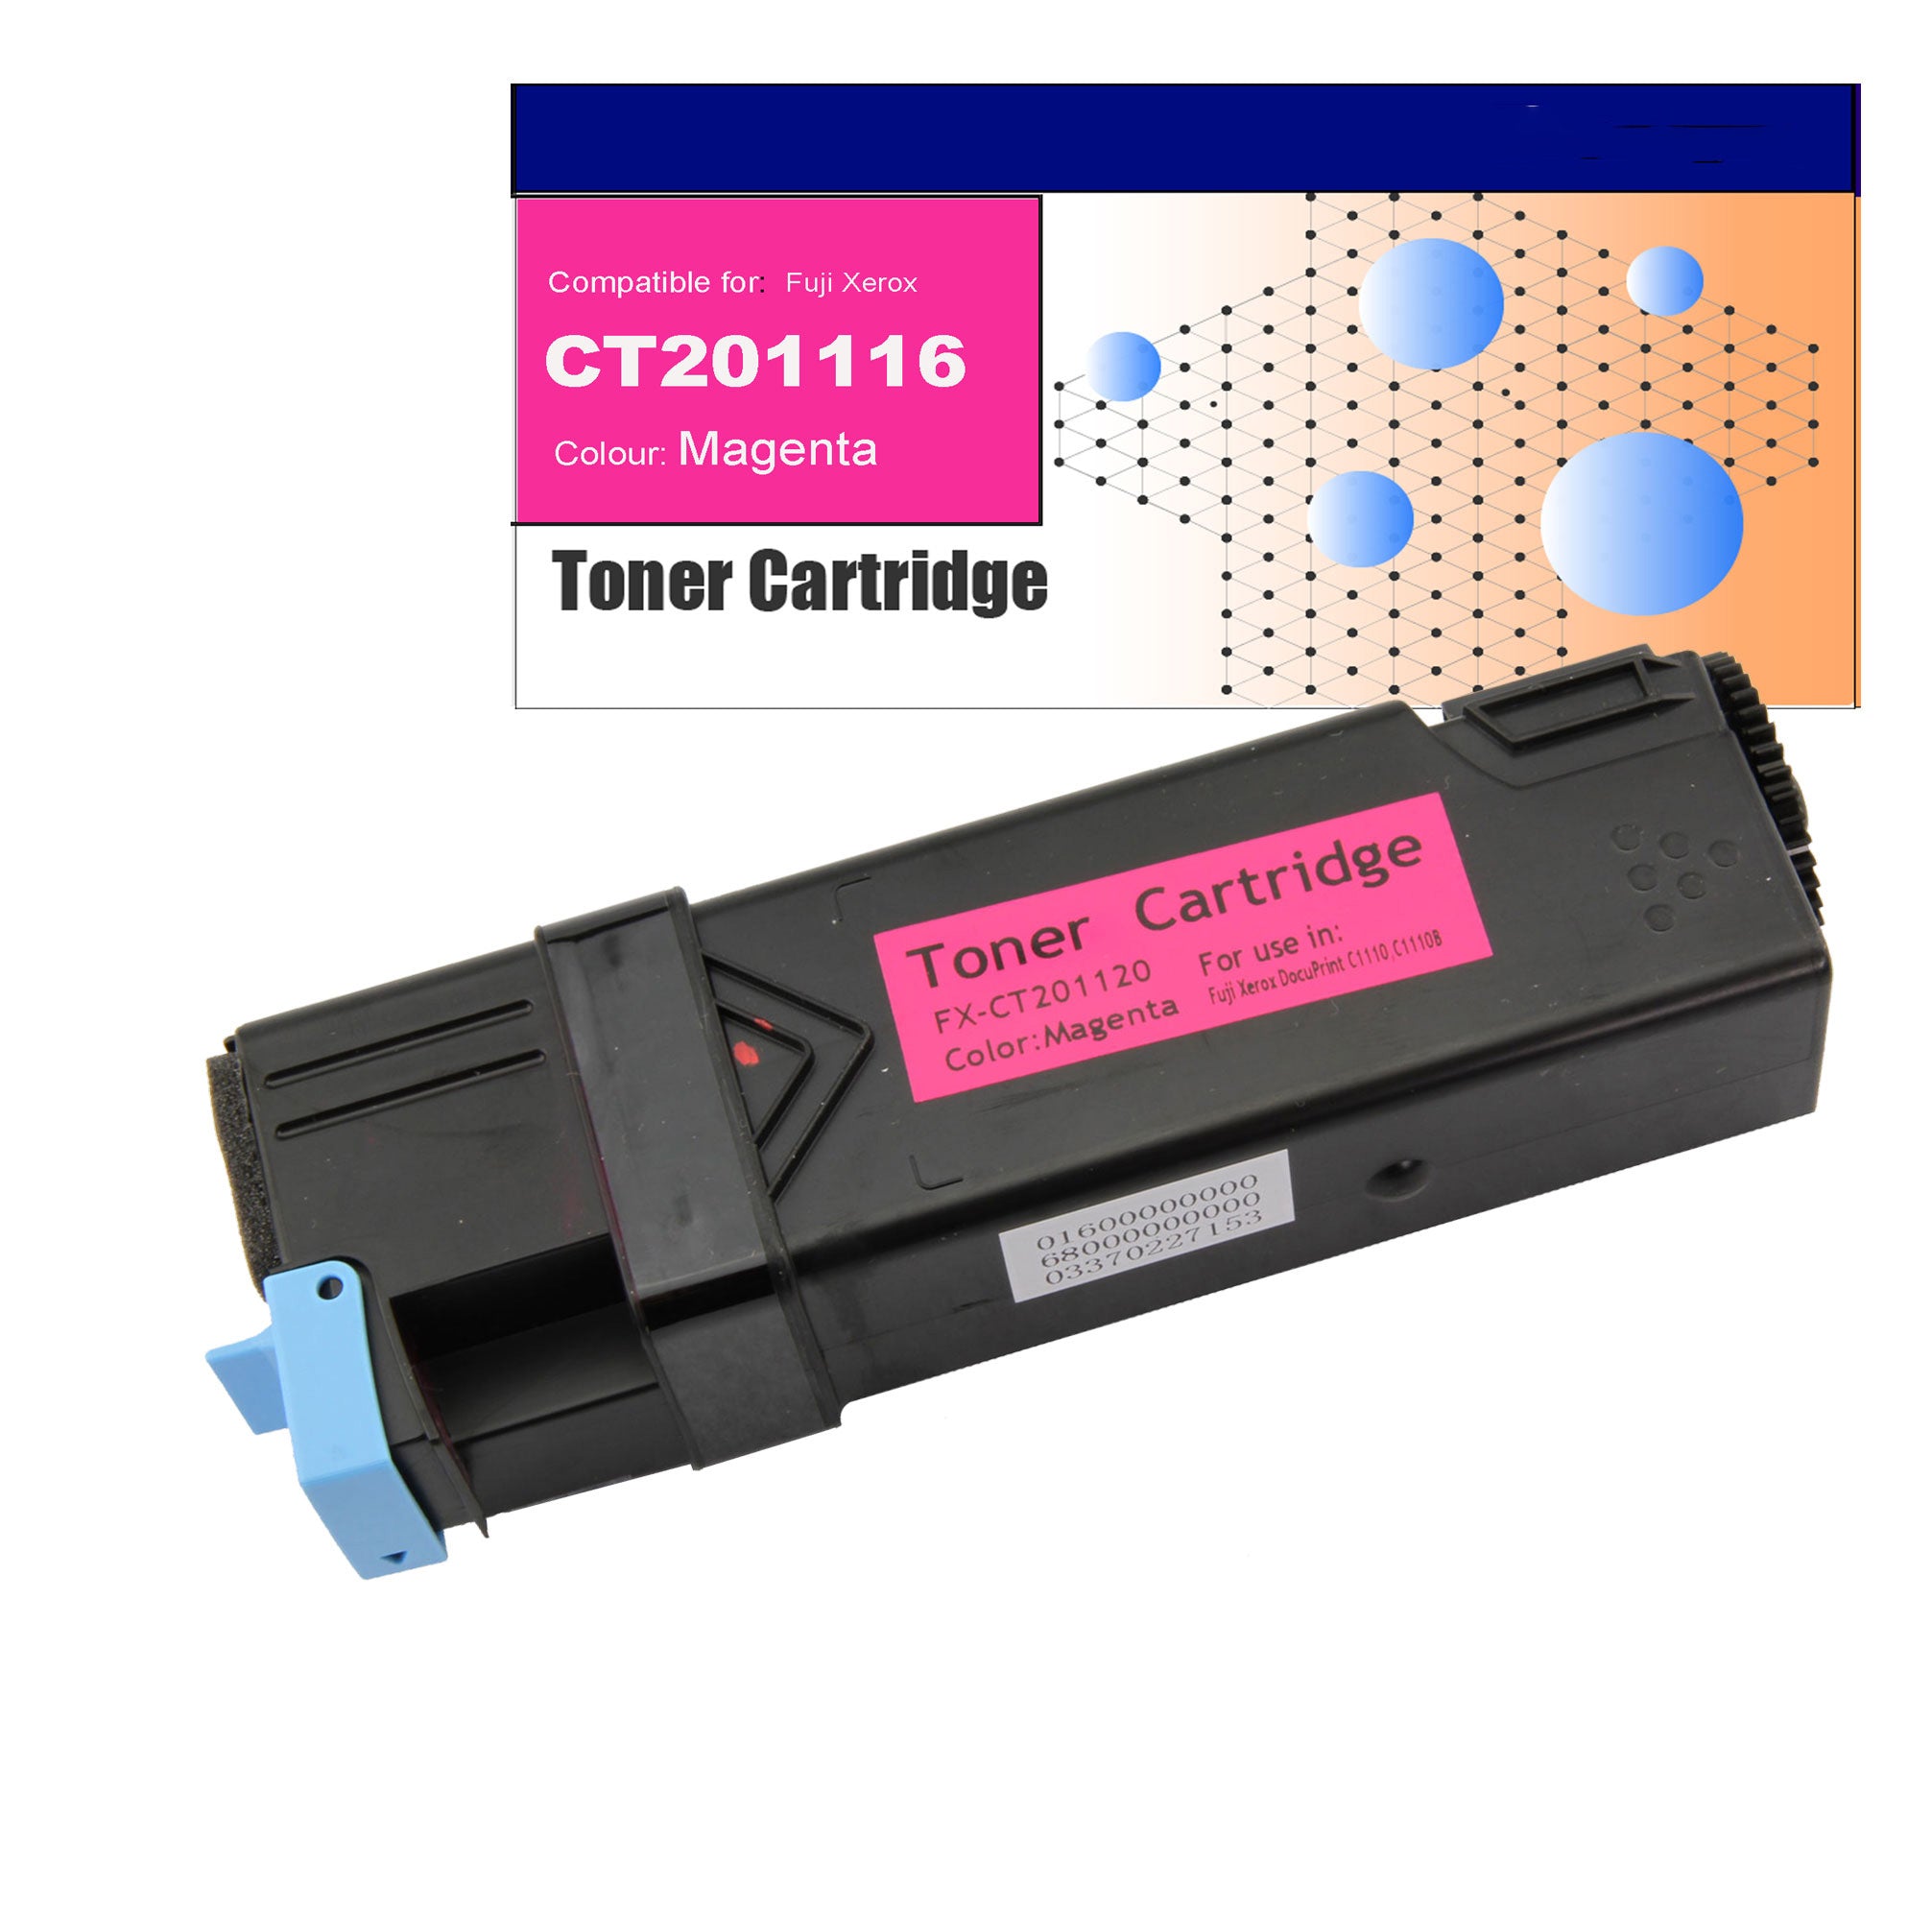 Compatible Toner for Fuji Xerox CT201116 (C1110) Magenta Toner Cartridges